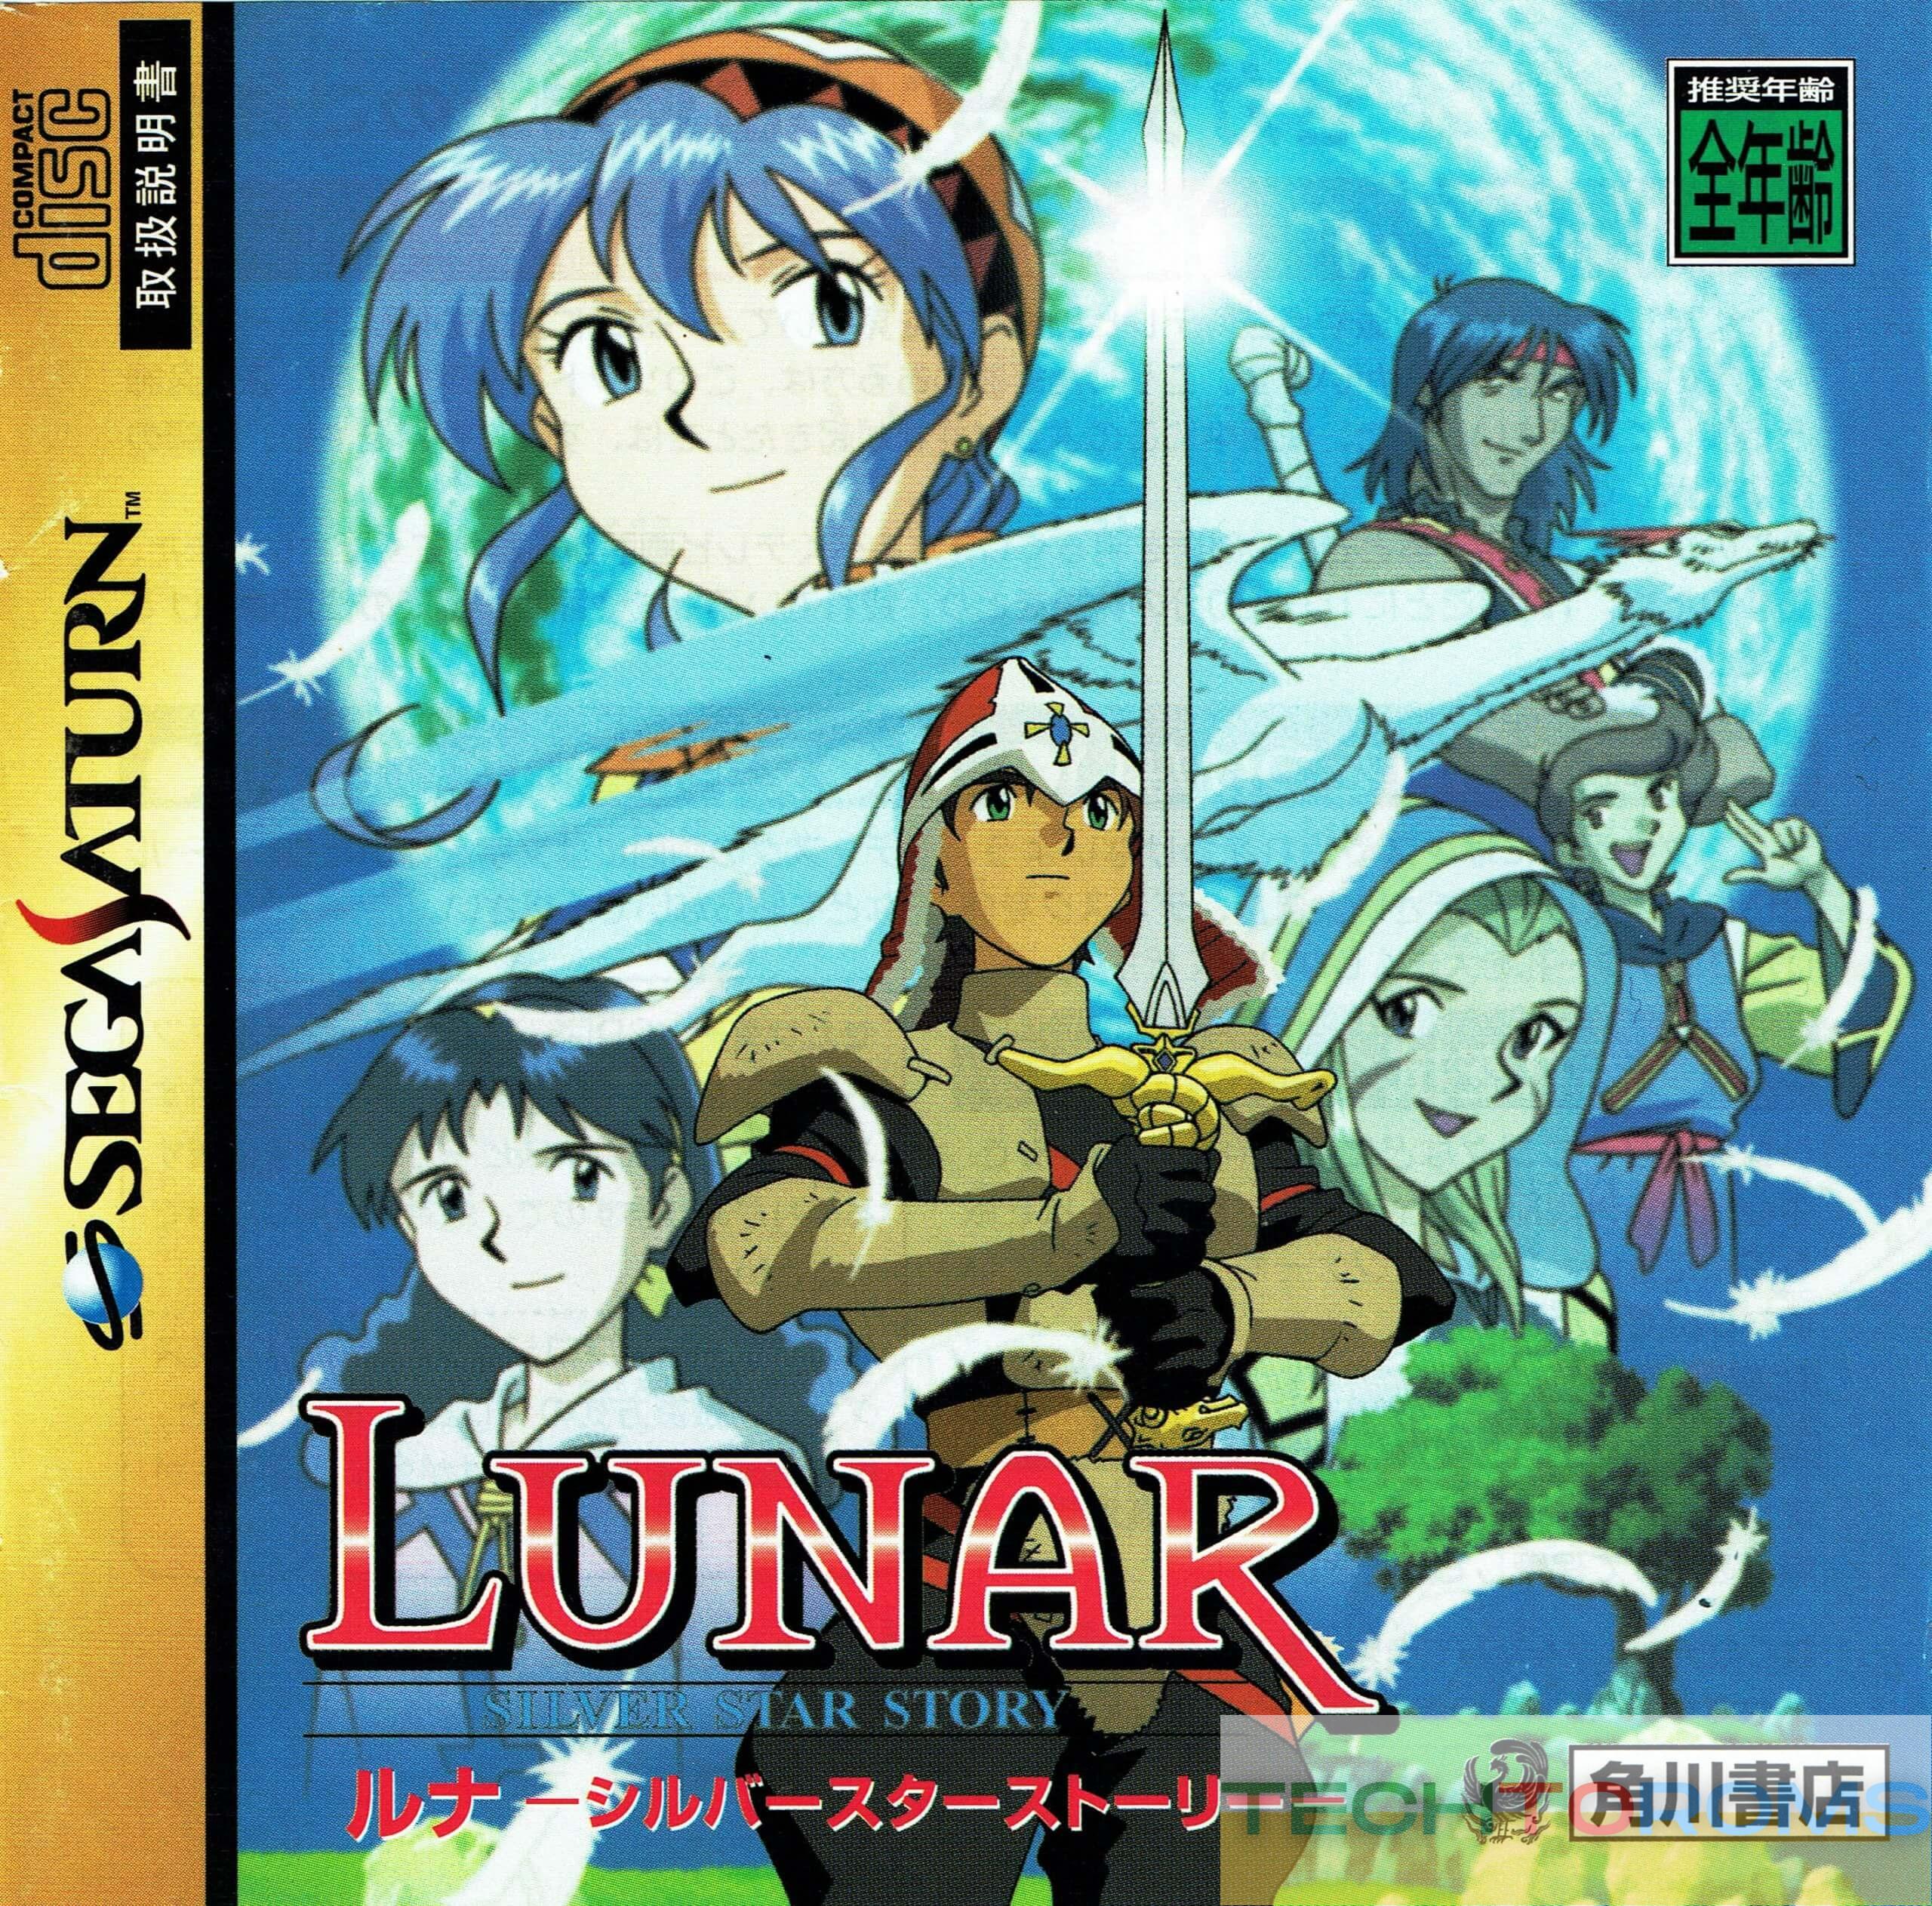 Lunar: Silver Star-verhaal